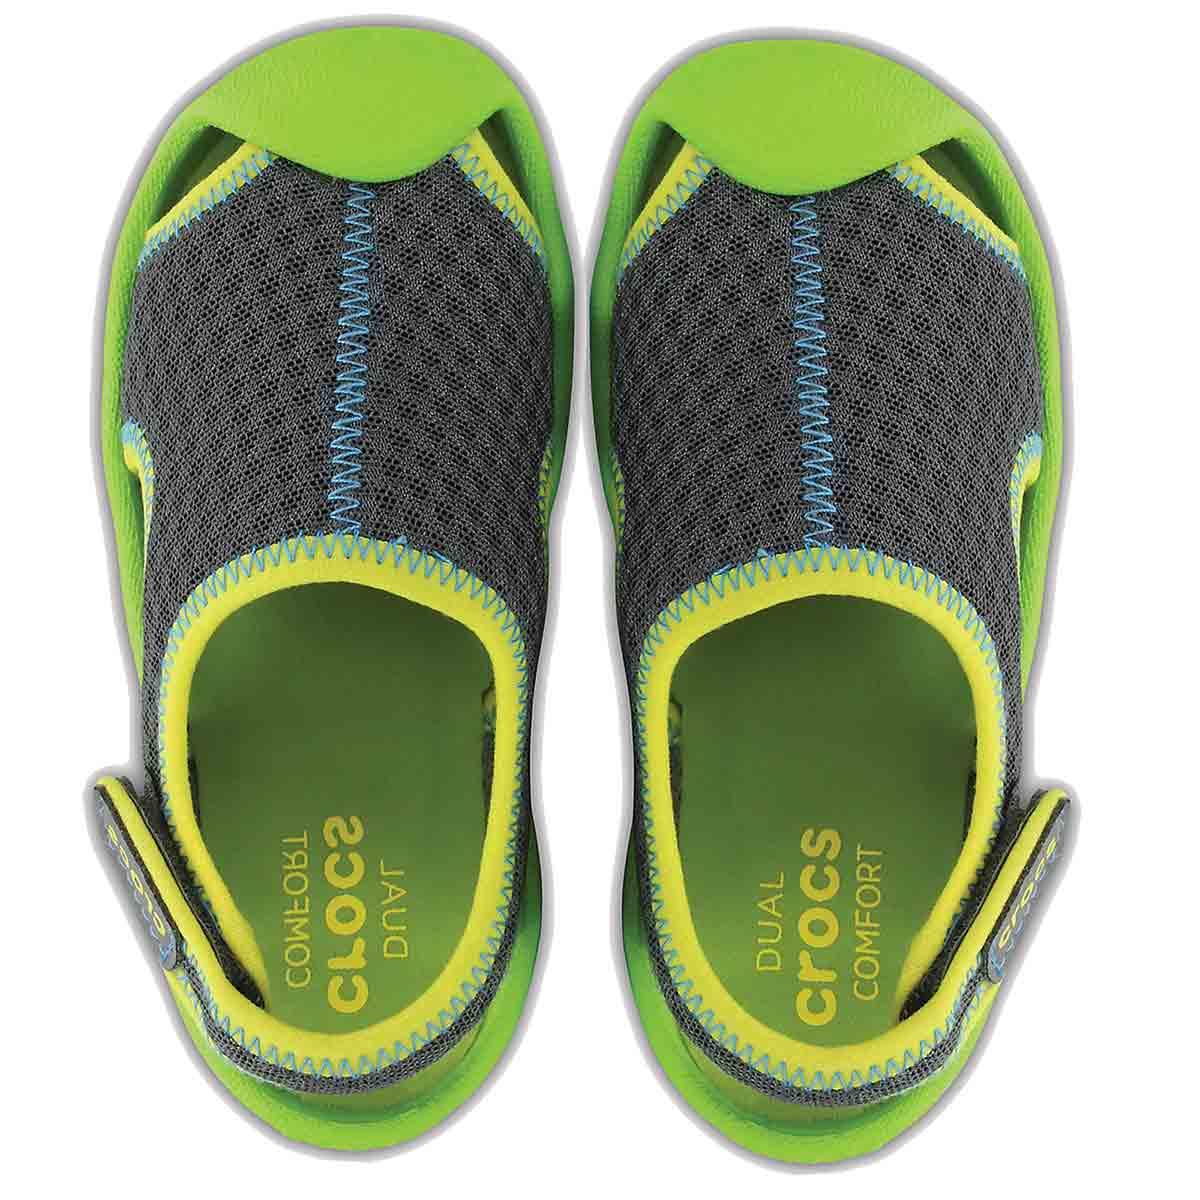 Crocs Swiftwater Sandal K (Graphite/Volt Green) Online at Lowest Price